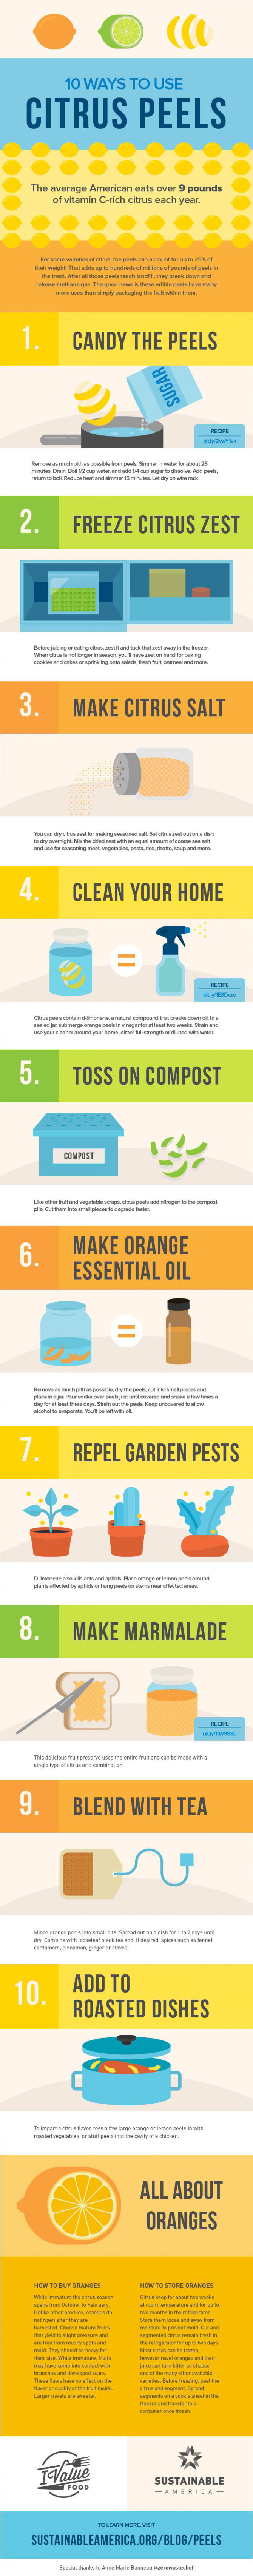 10 Ways to Use Citrus Peels infographic